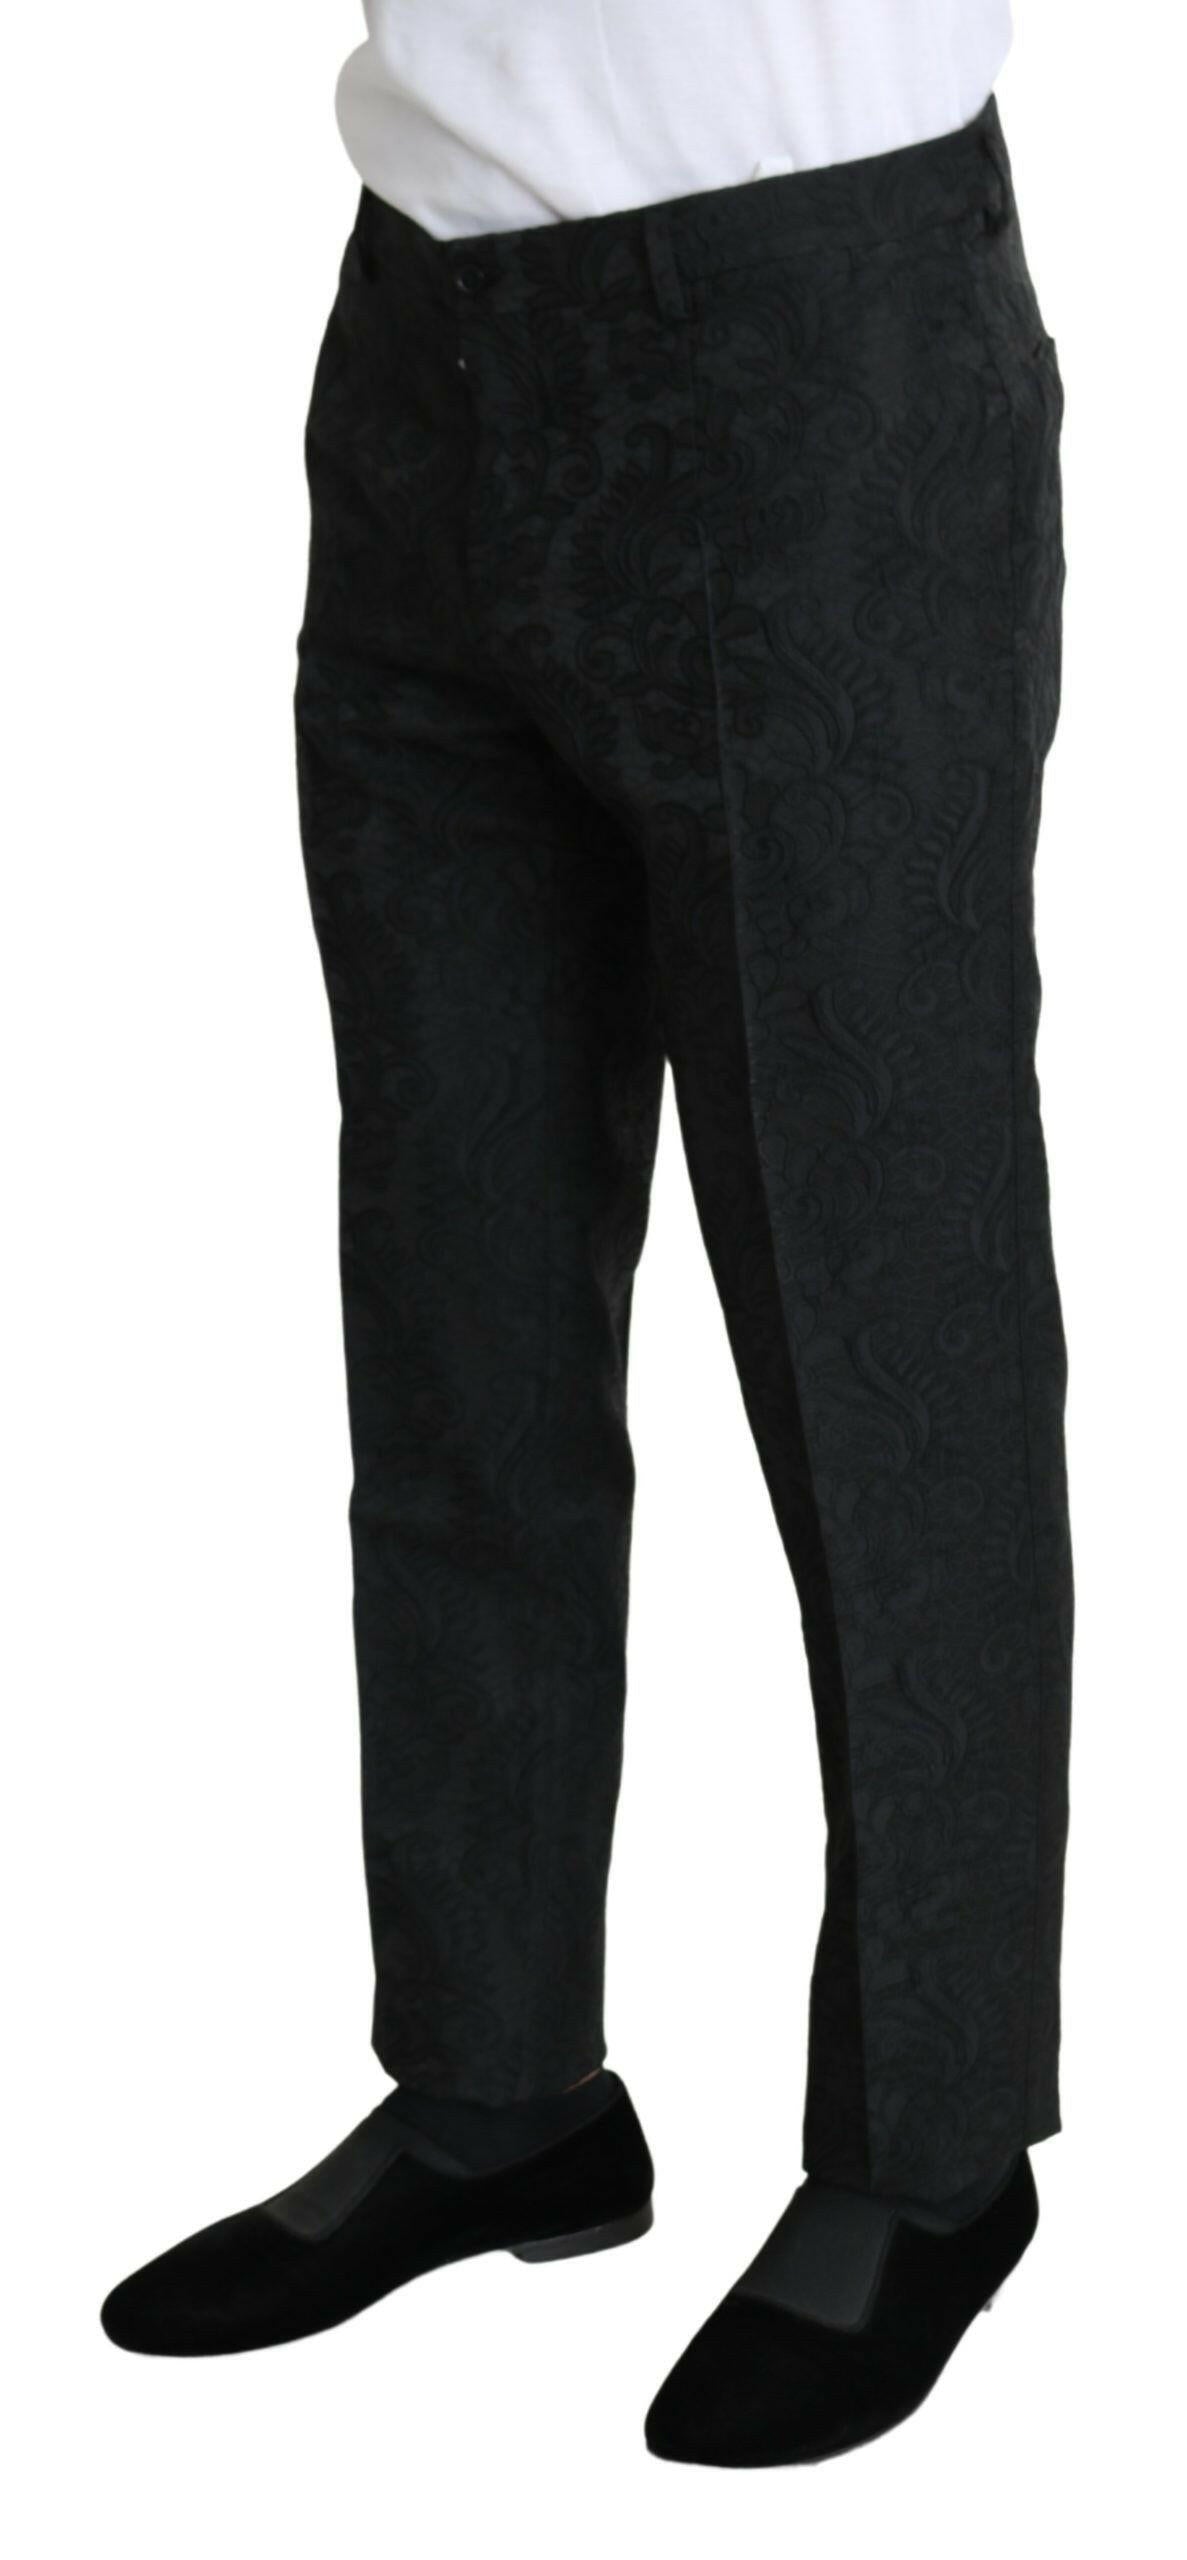 Dolce & Gabbana Black Floral Brocade Slim Trouser Pants - GENUINE AUTHENTIC BRAND LLC  